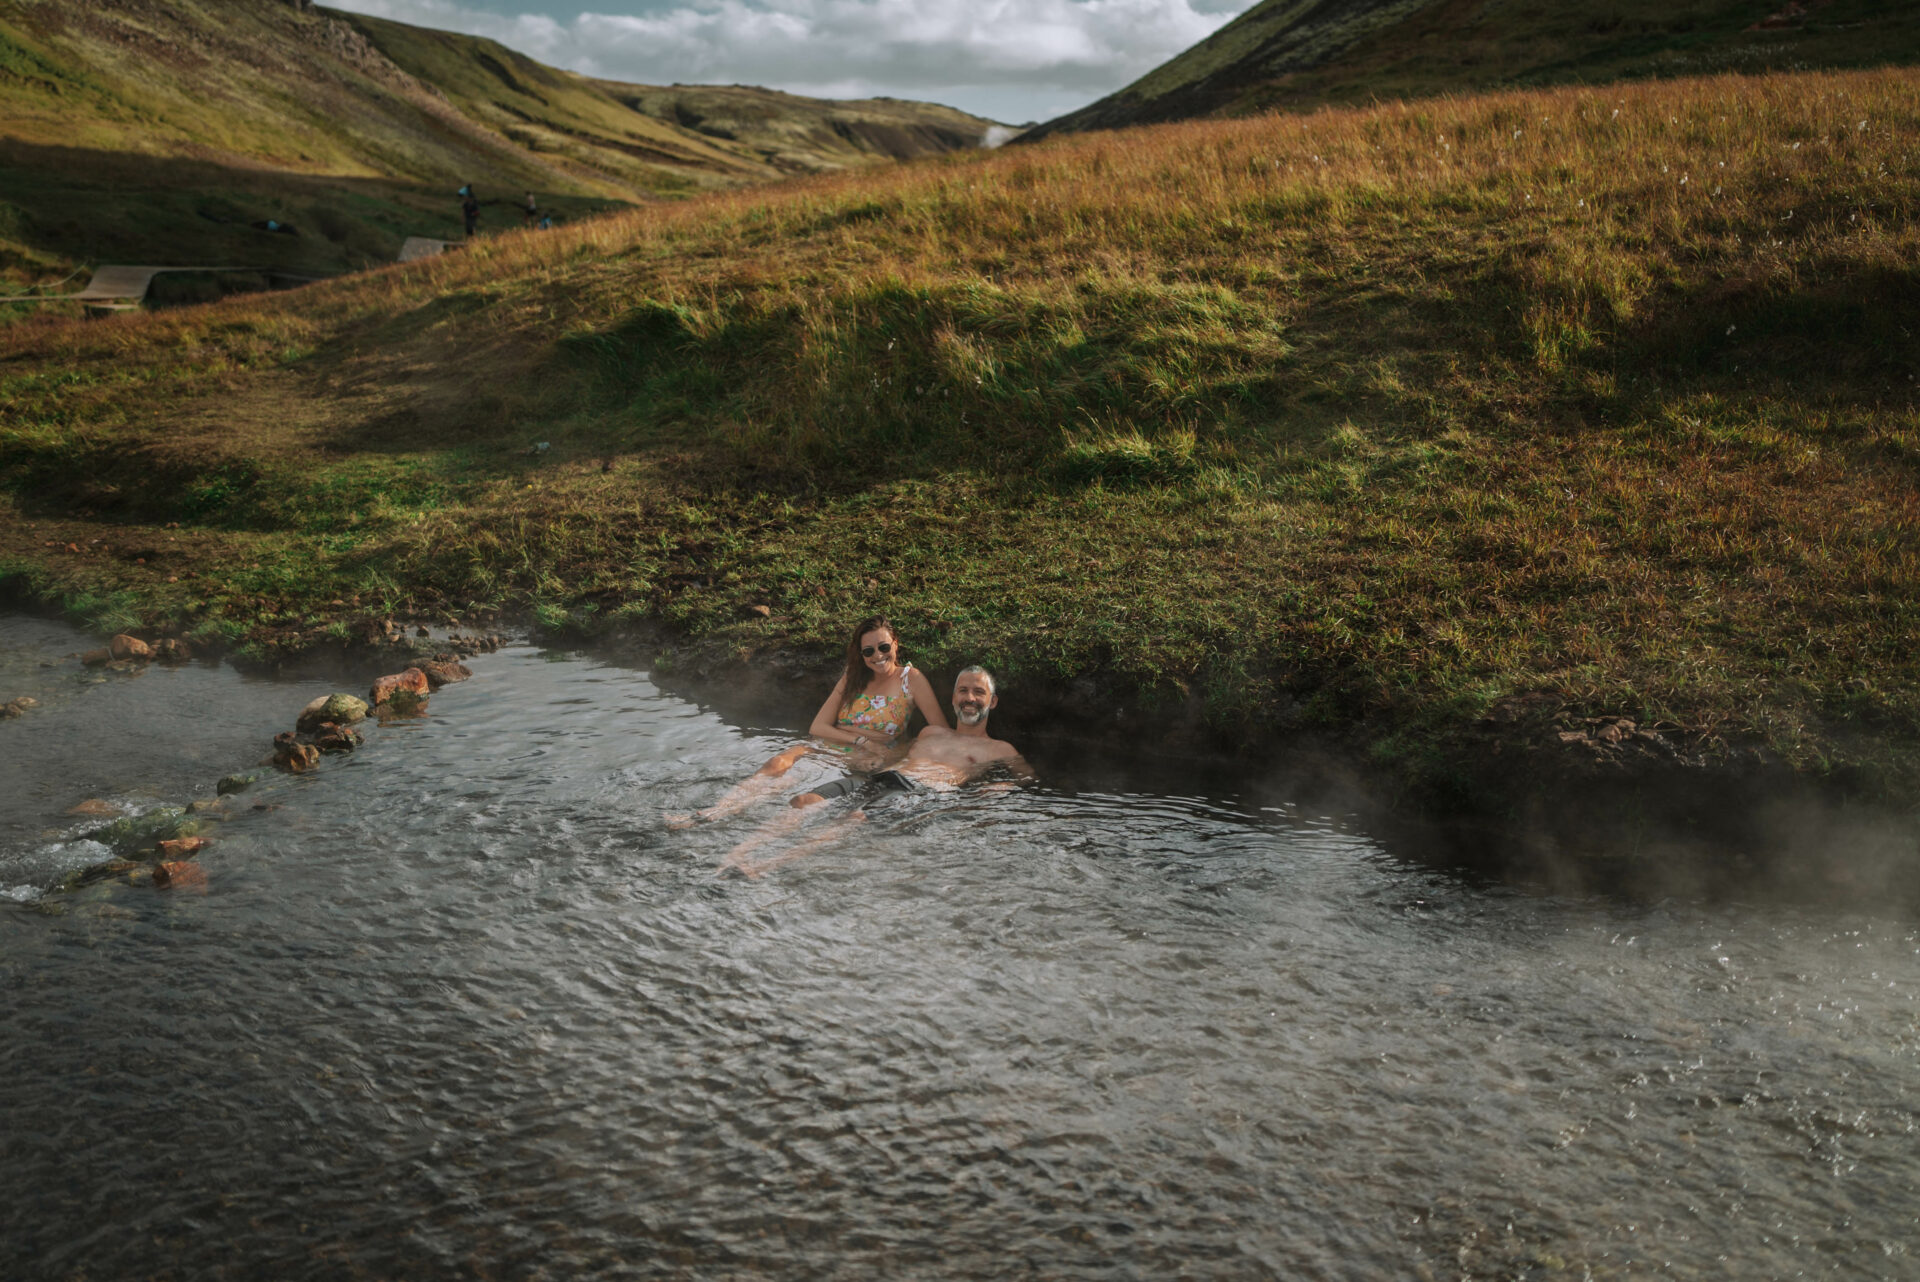 Enjoying the hot springs